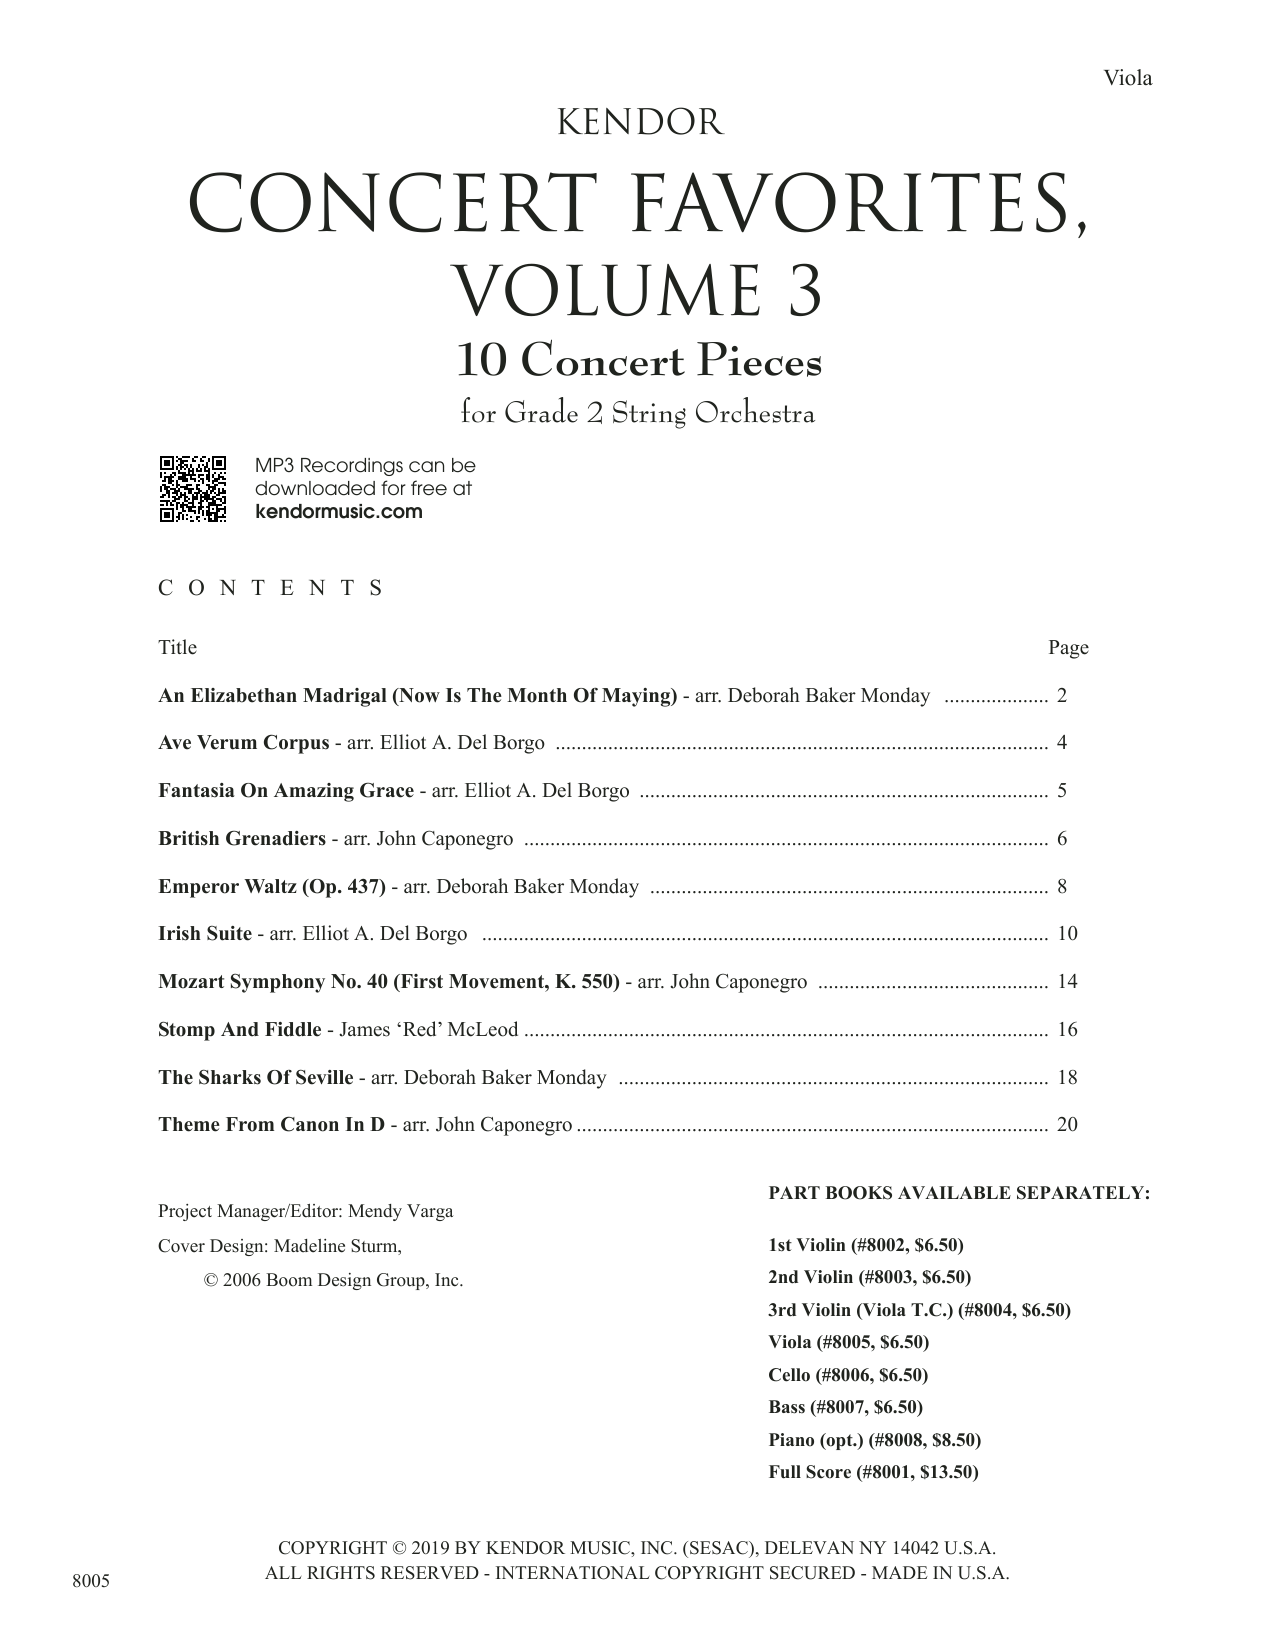 Download Various Kendor Concert Favorites, Volume 3 - Vi Sheet Music